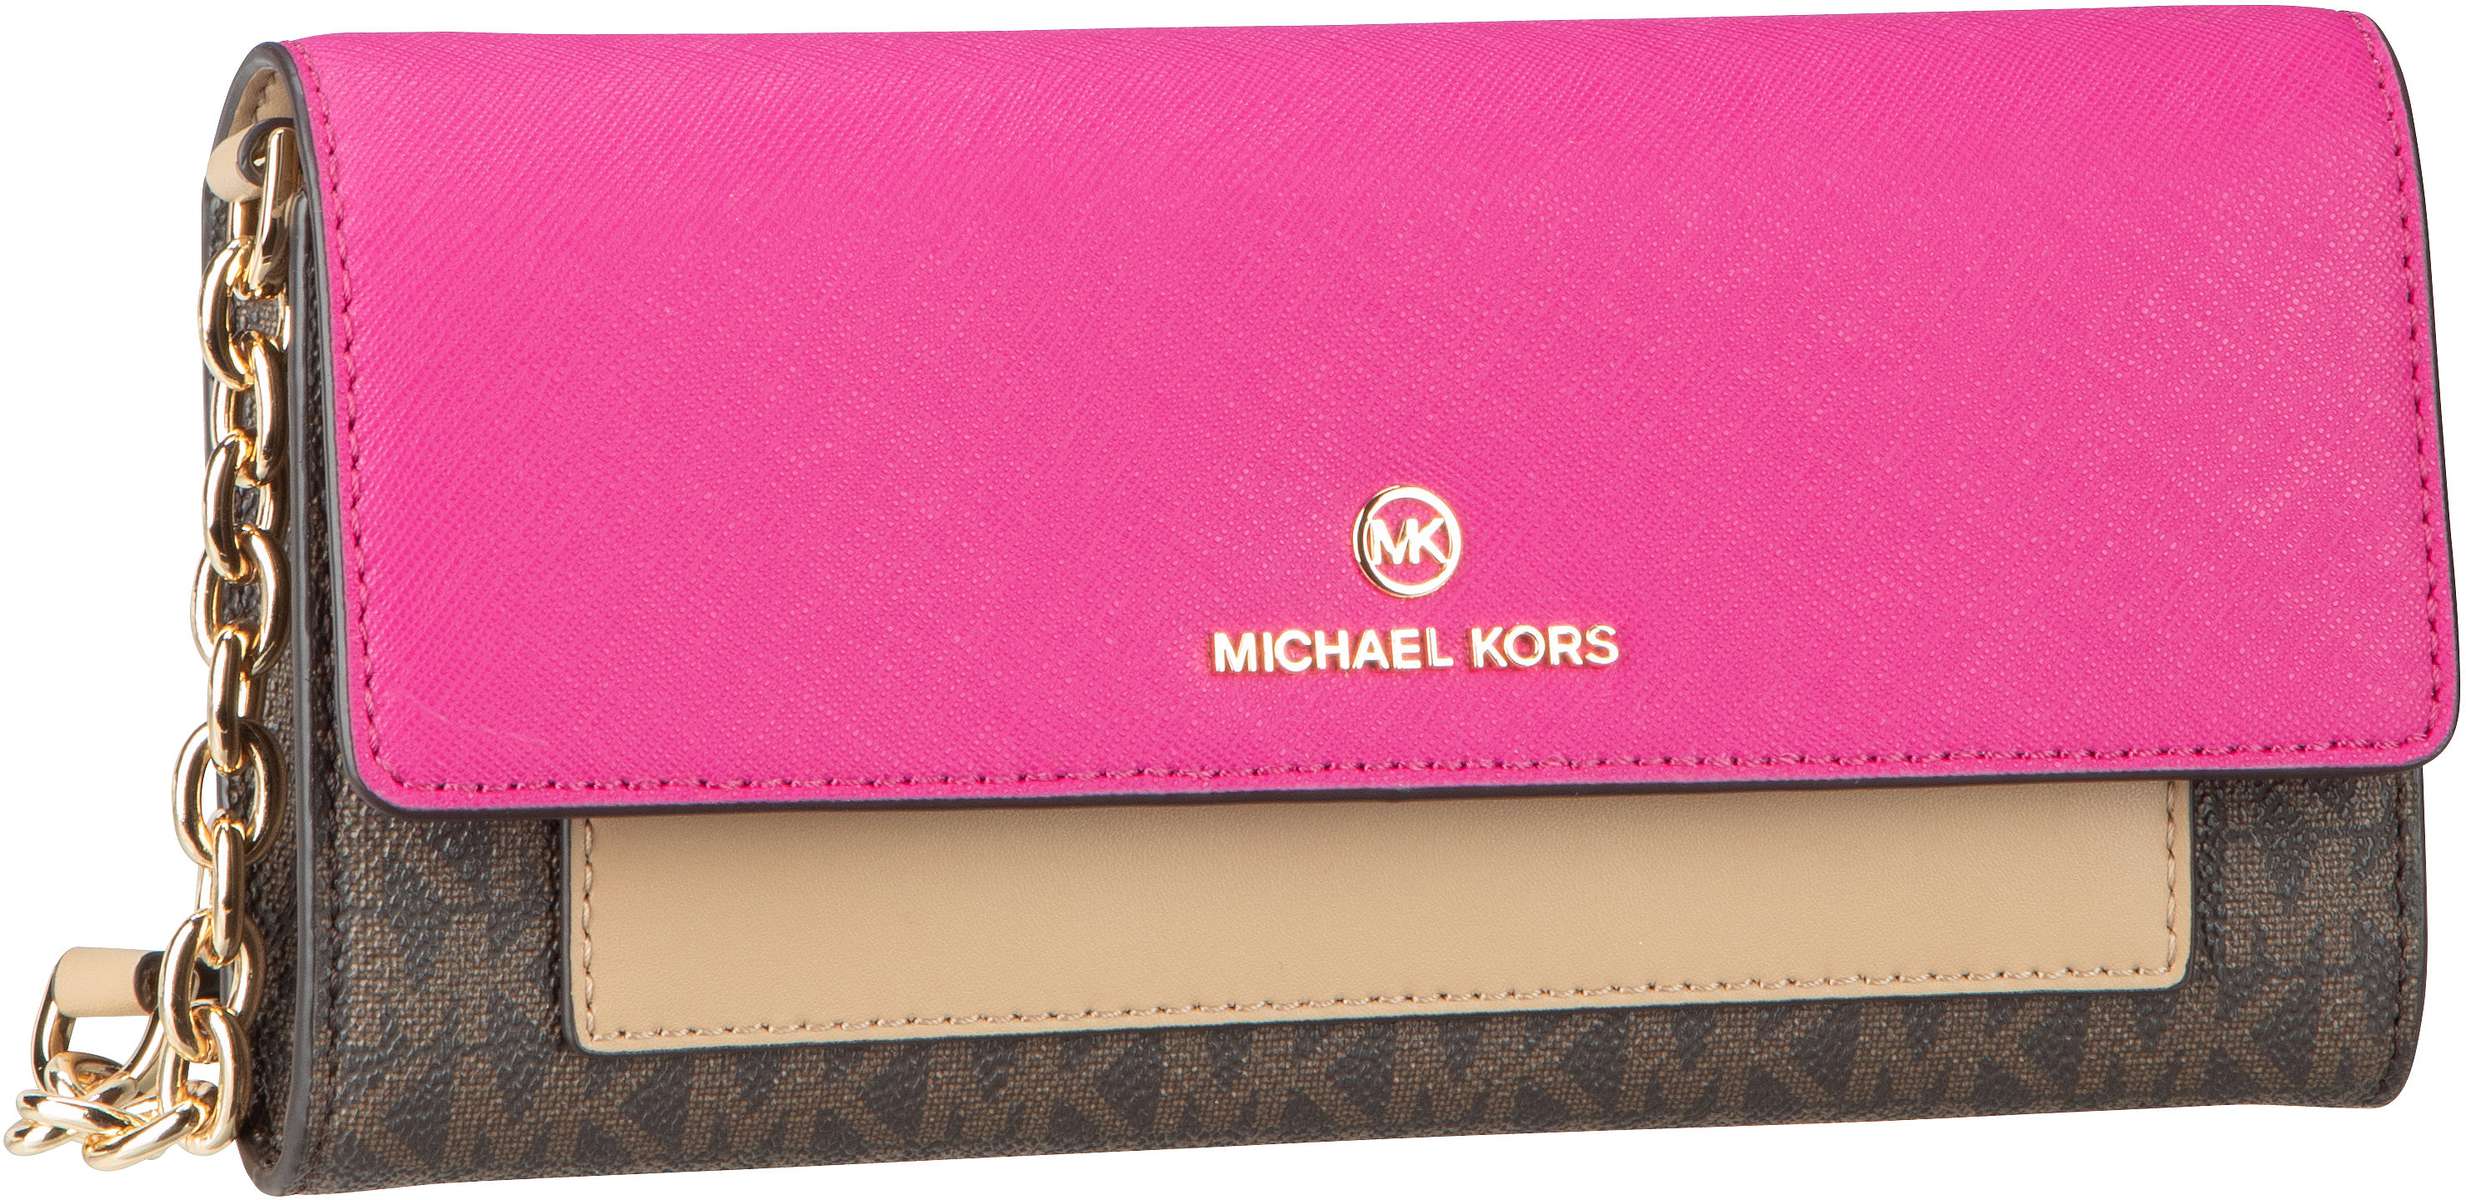 Michael Kors Jet Set Charm Medium 2in1 Wallet Chain Xbody MK Signature - Wild Berry Multi